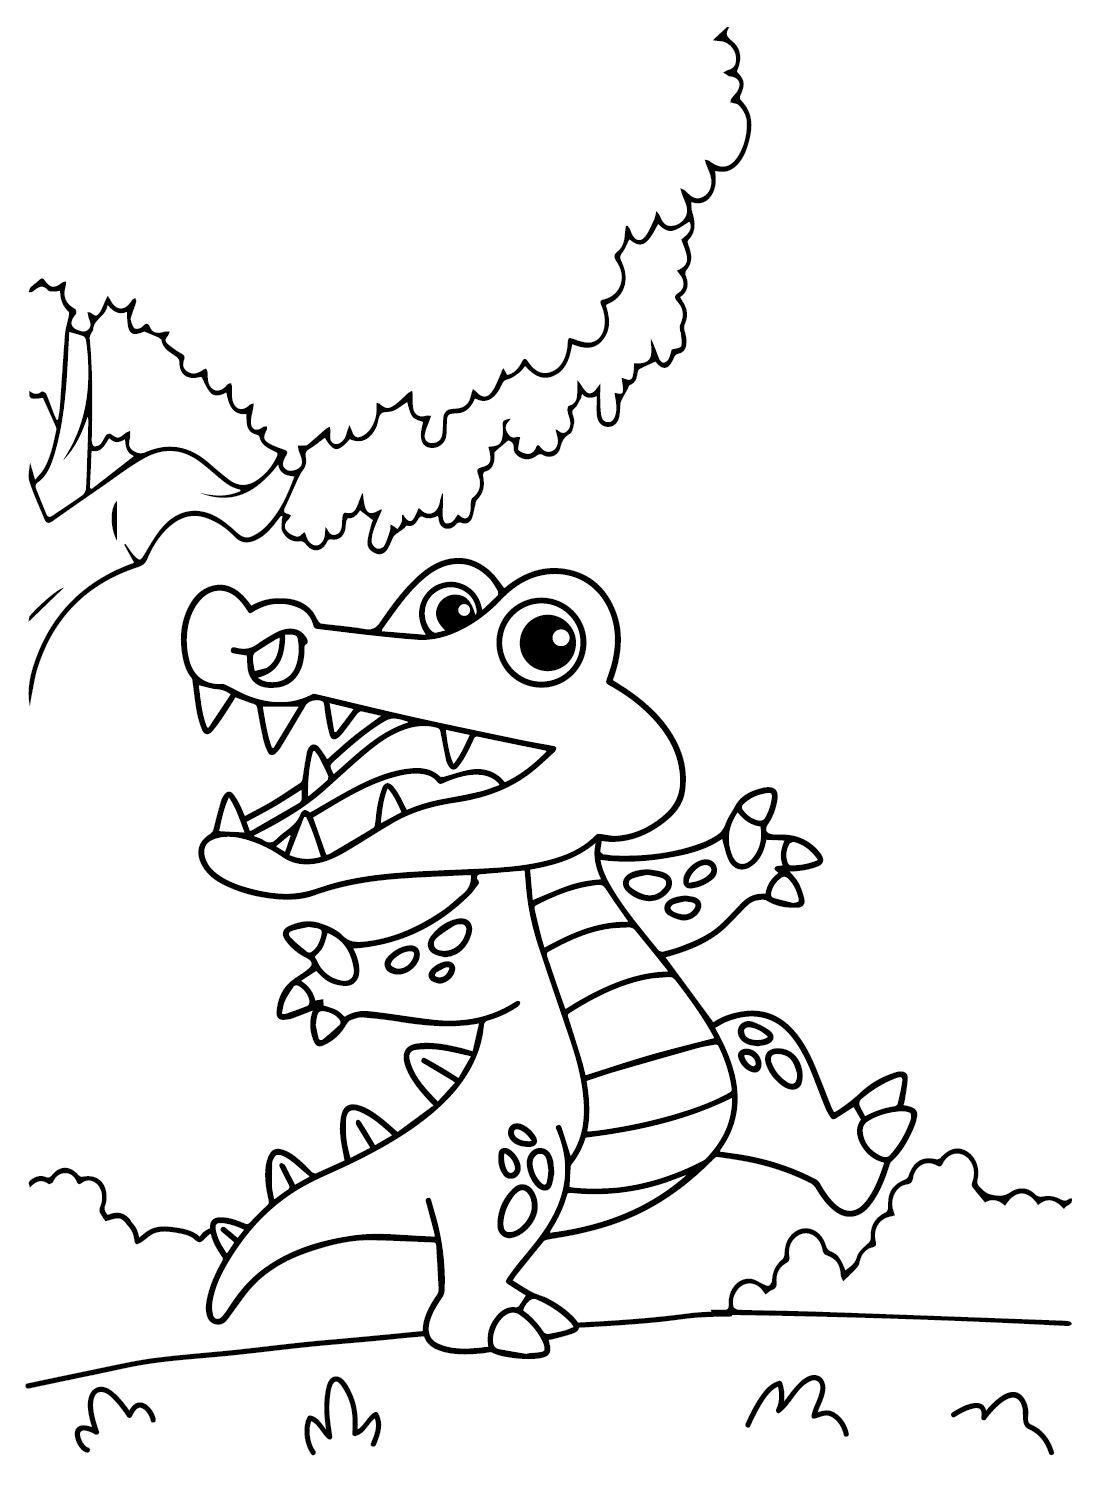 Baby Crocodile Coloring Page